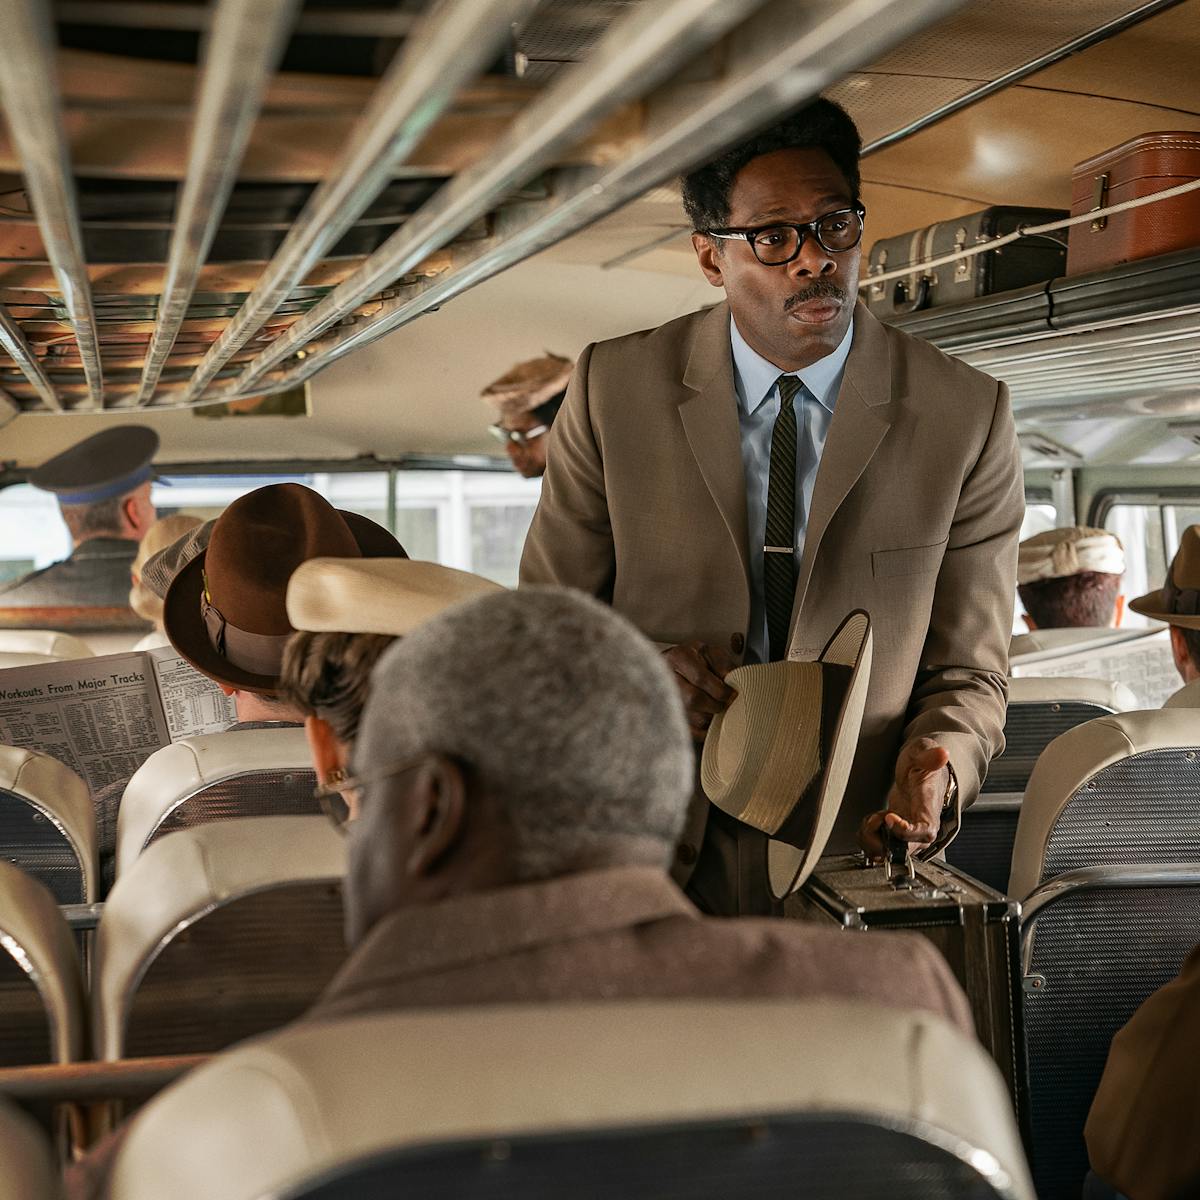 Bayard Rustin (Colman Domingo) walks through a bus wearing a beige jacket.